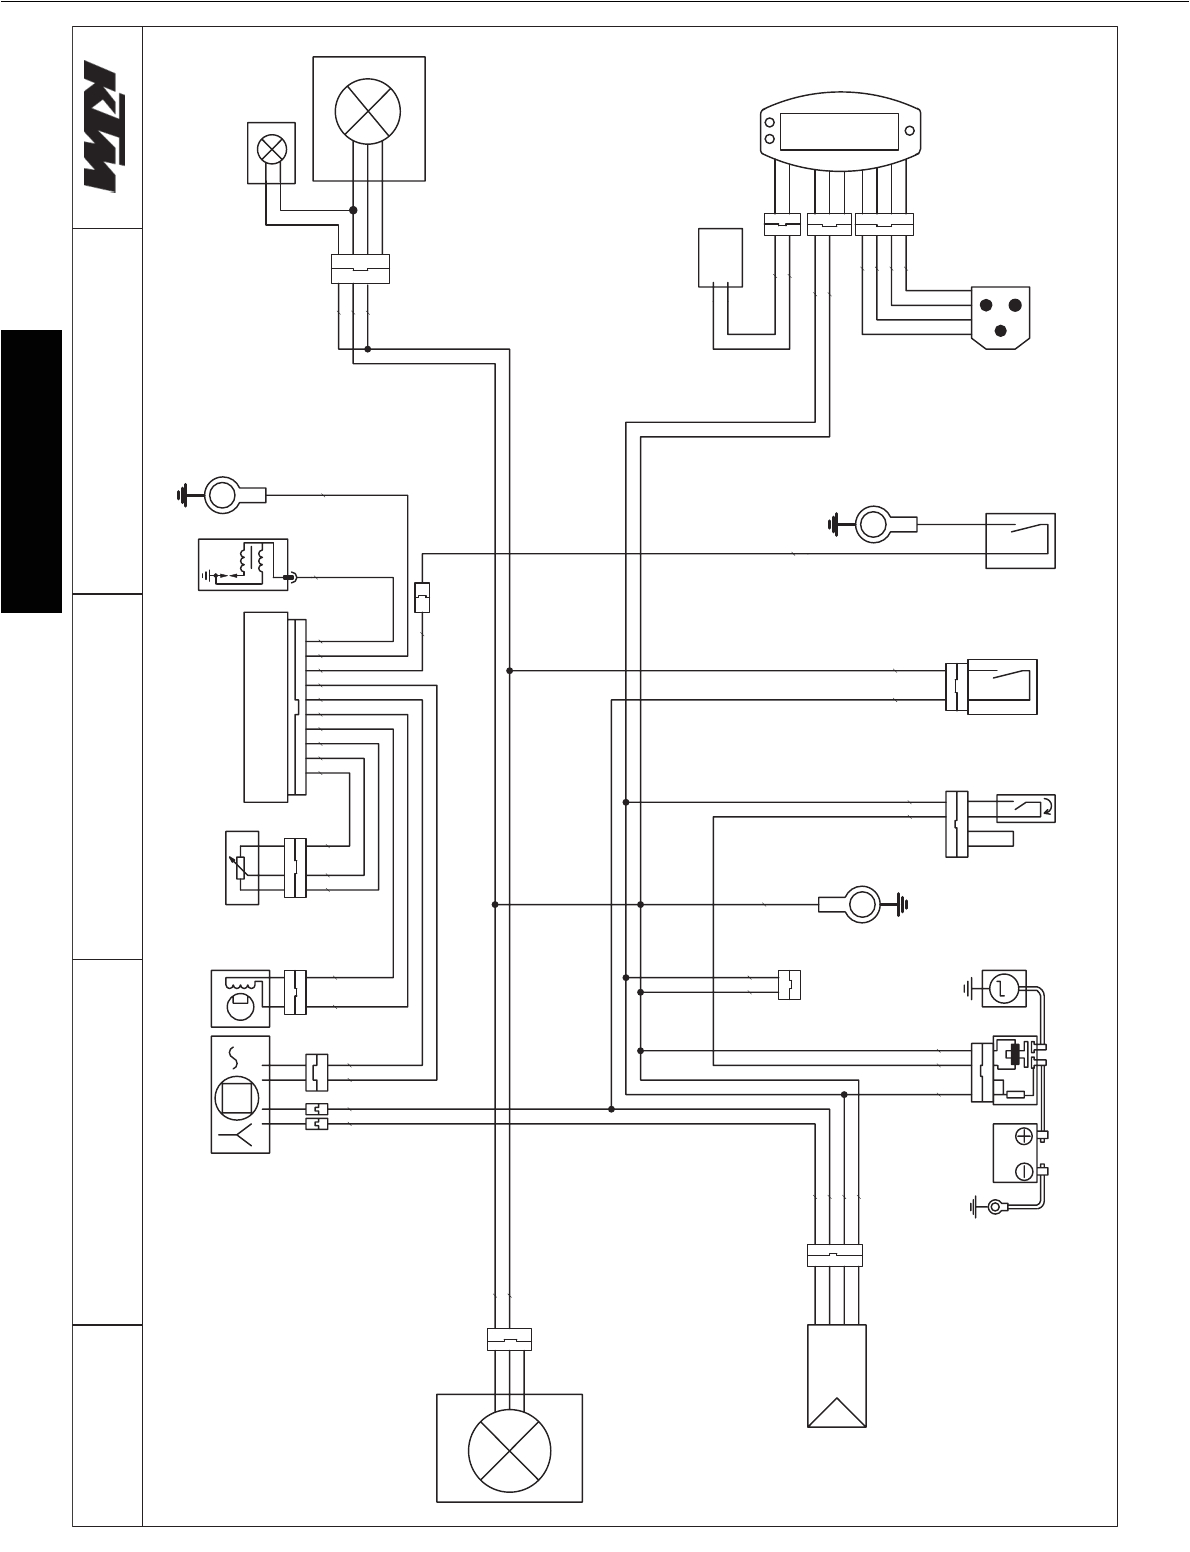 2008 ktm exc wiring diagram wiring diagram insidektm exc 2008 wiring diagram wiring diagram home ktm